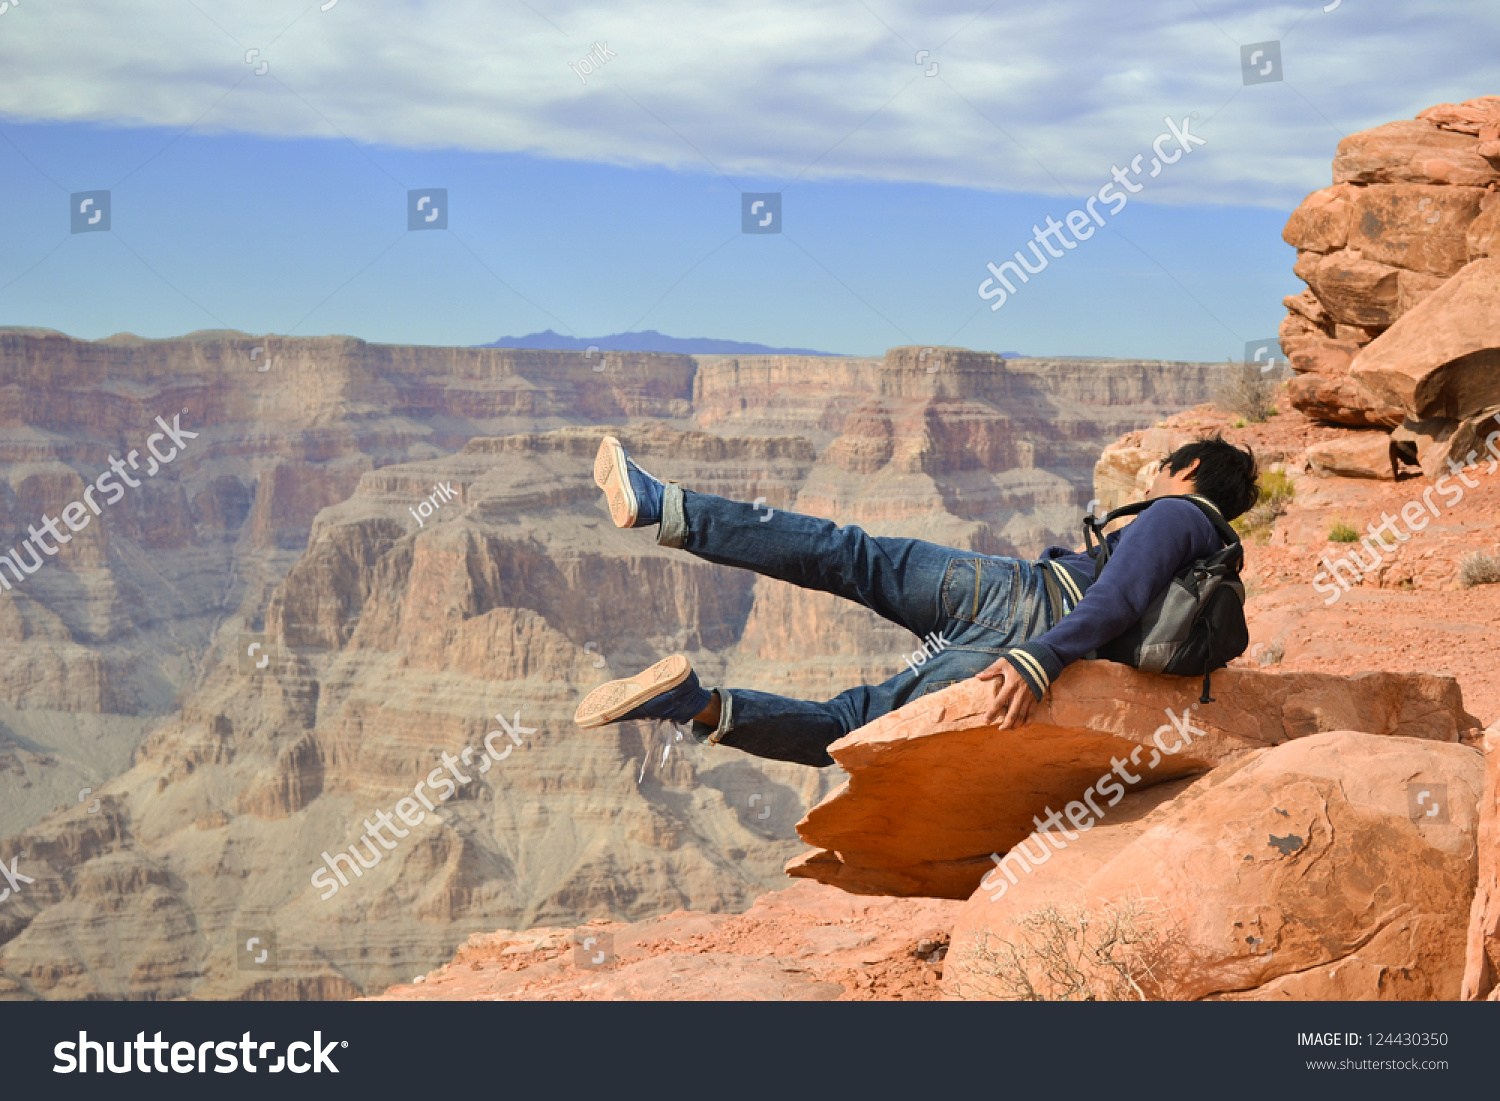 stock-photo-man-falling-from-the-rock-in-grand-canyon-arizona-usa-124430350.jpg